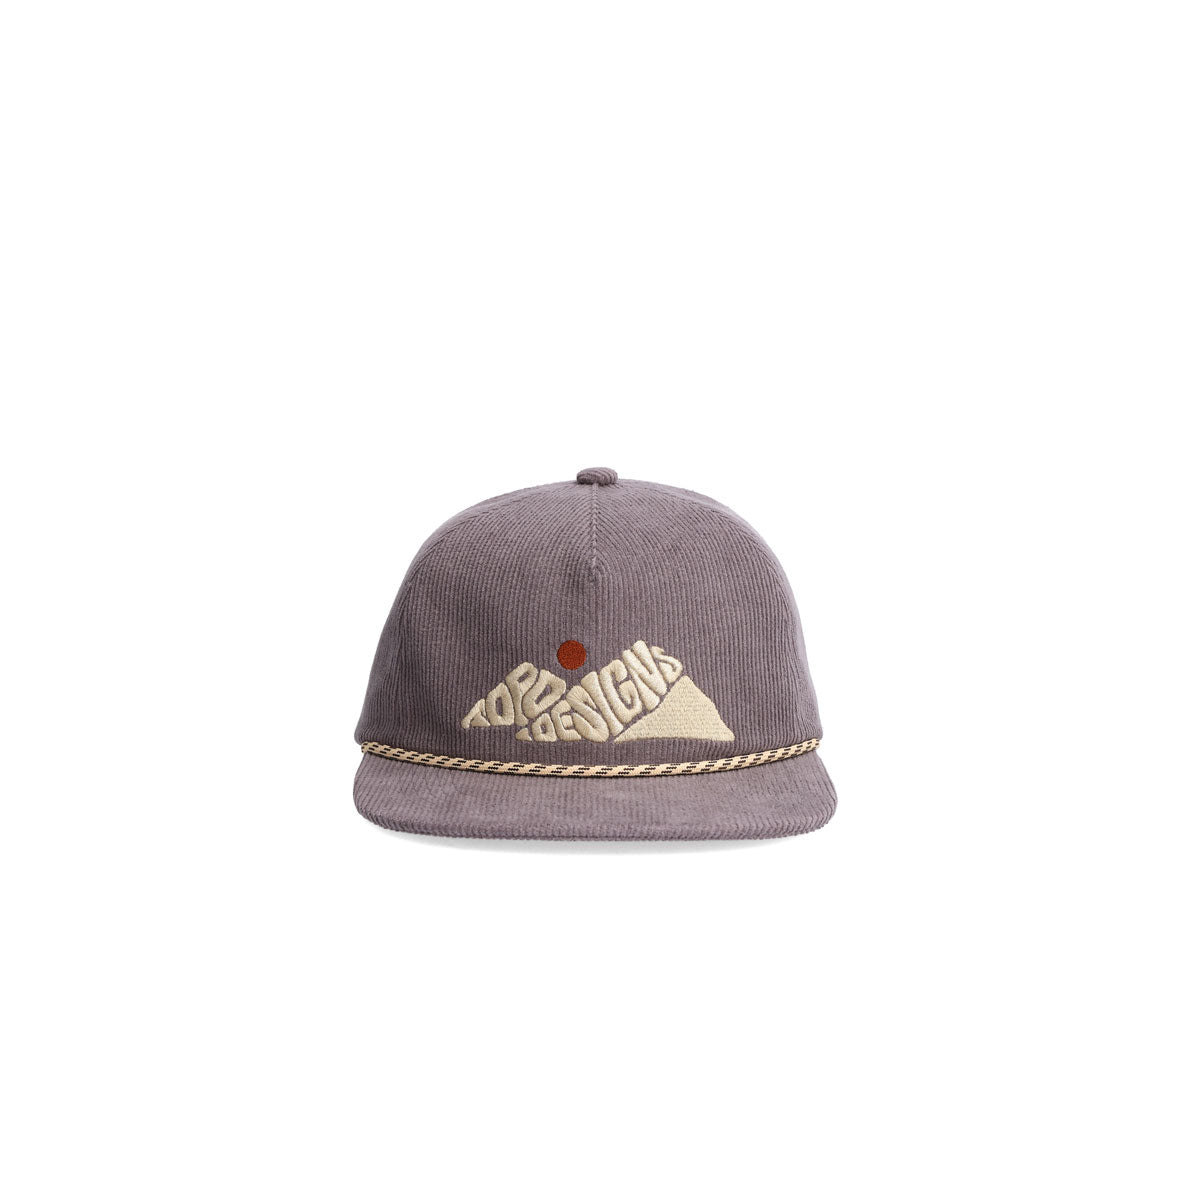 Topo Designs : Corduroy Trucker Hat Rugged Peaks : Charcoal